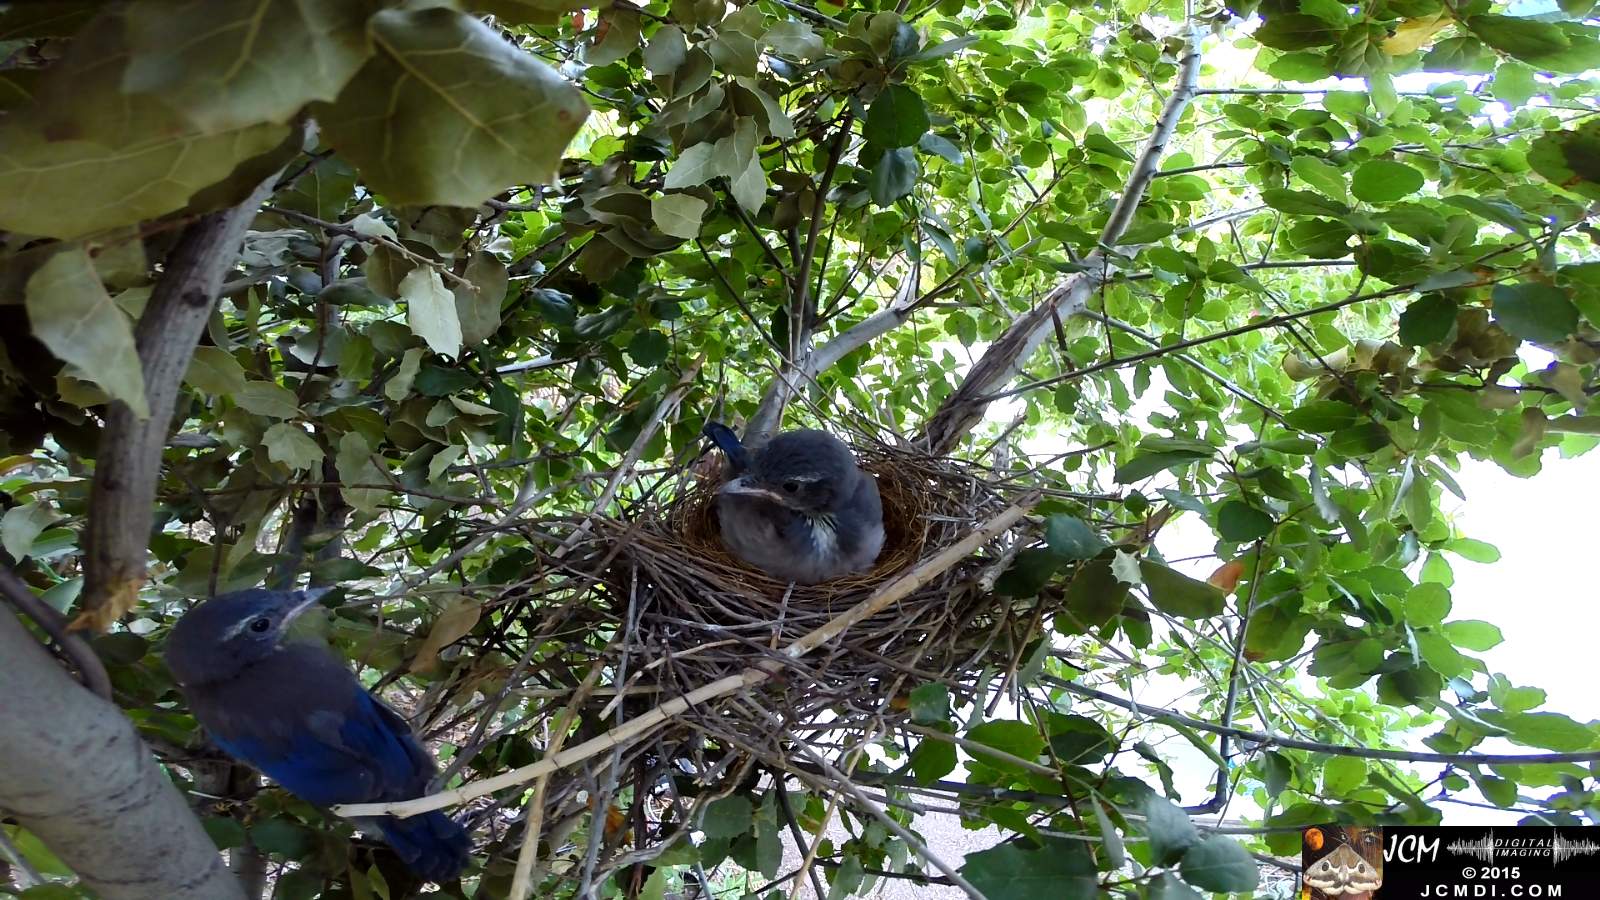 Scrub Jay Documentary chick exploring way outside nest